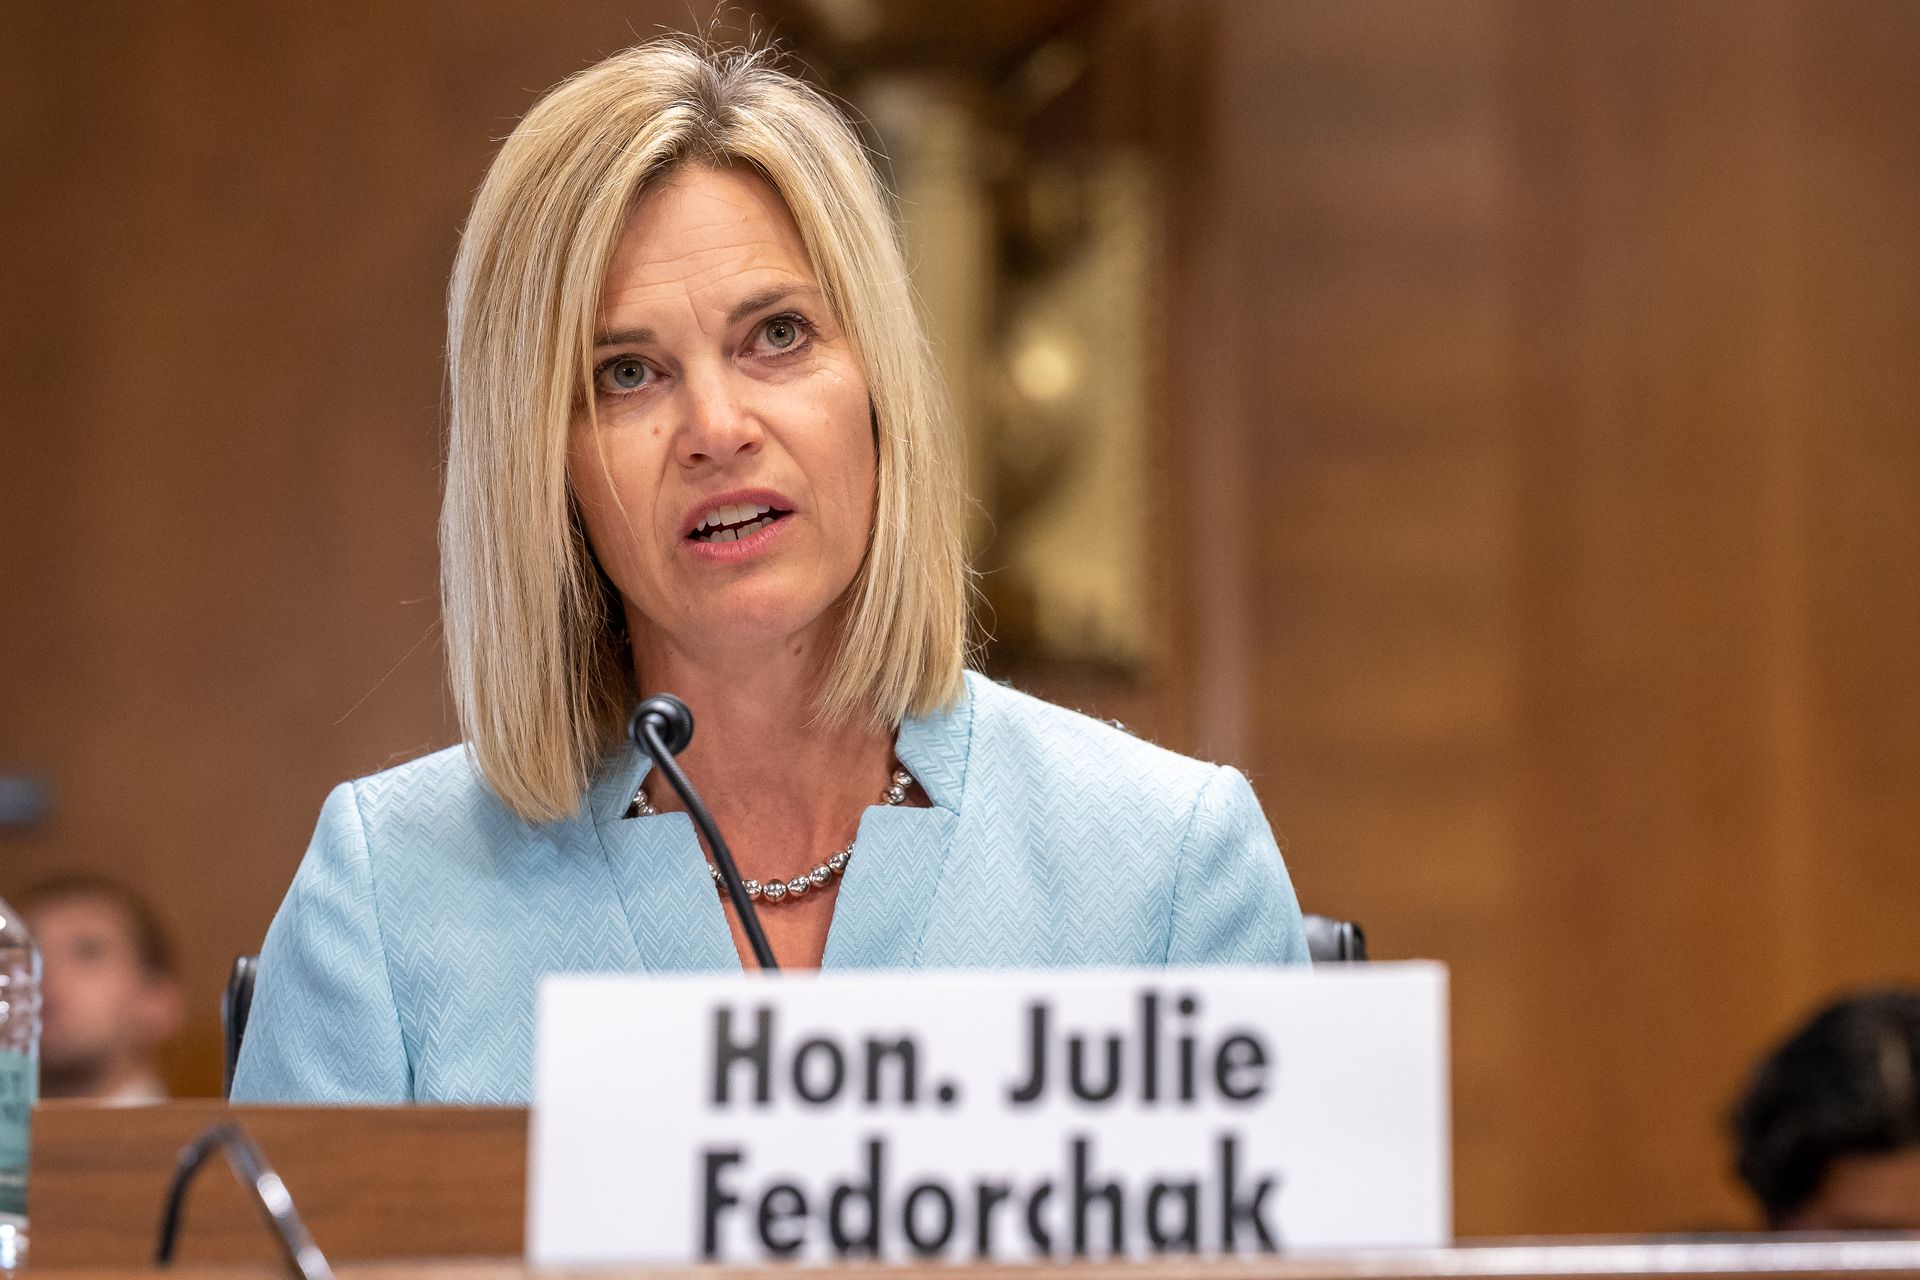 Comm. Fedorchak Testifies at U.S. Senate Subcommittee Hearing